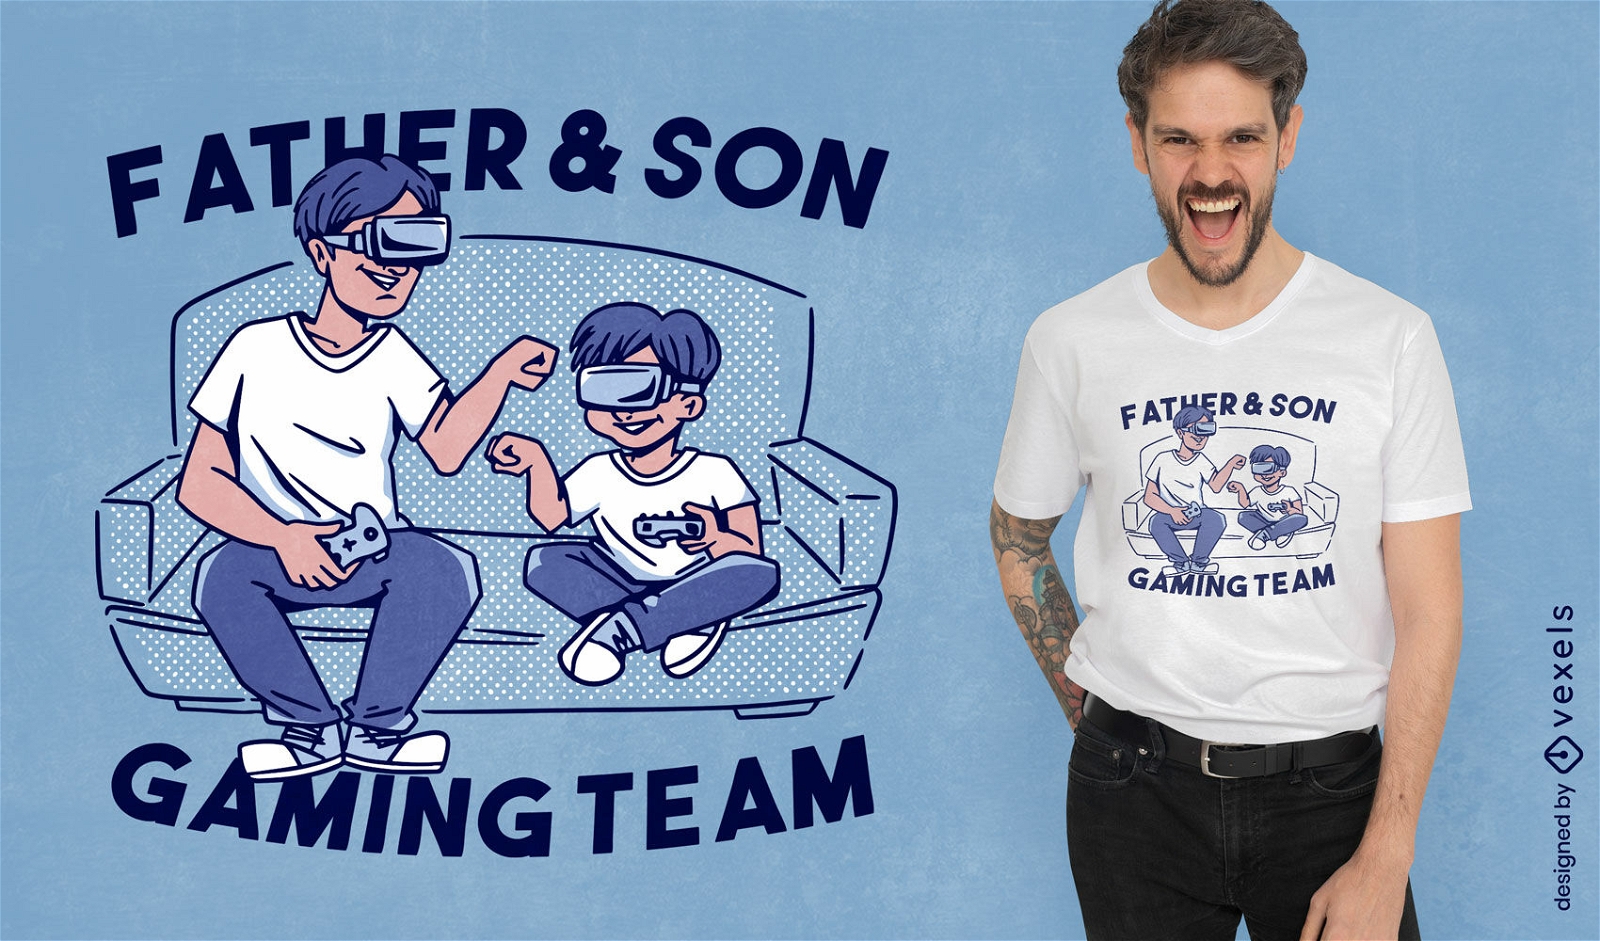 Dise?o de camiseta de padre e hijo jugando videojuegos.